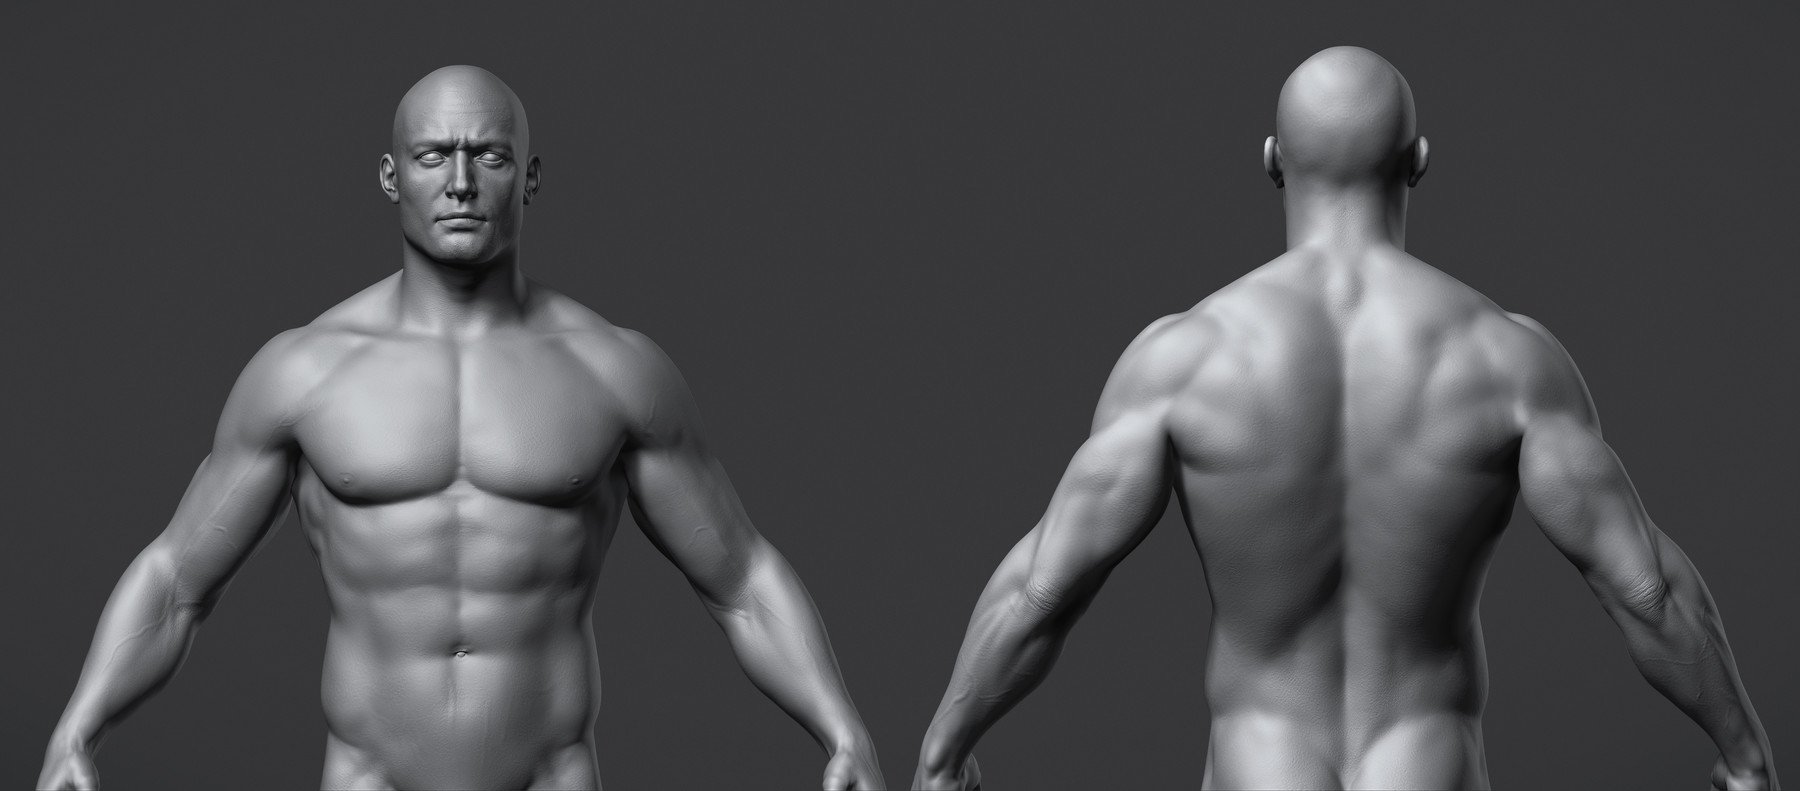 ArtStation - Male Anatomy Reference Model